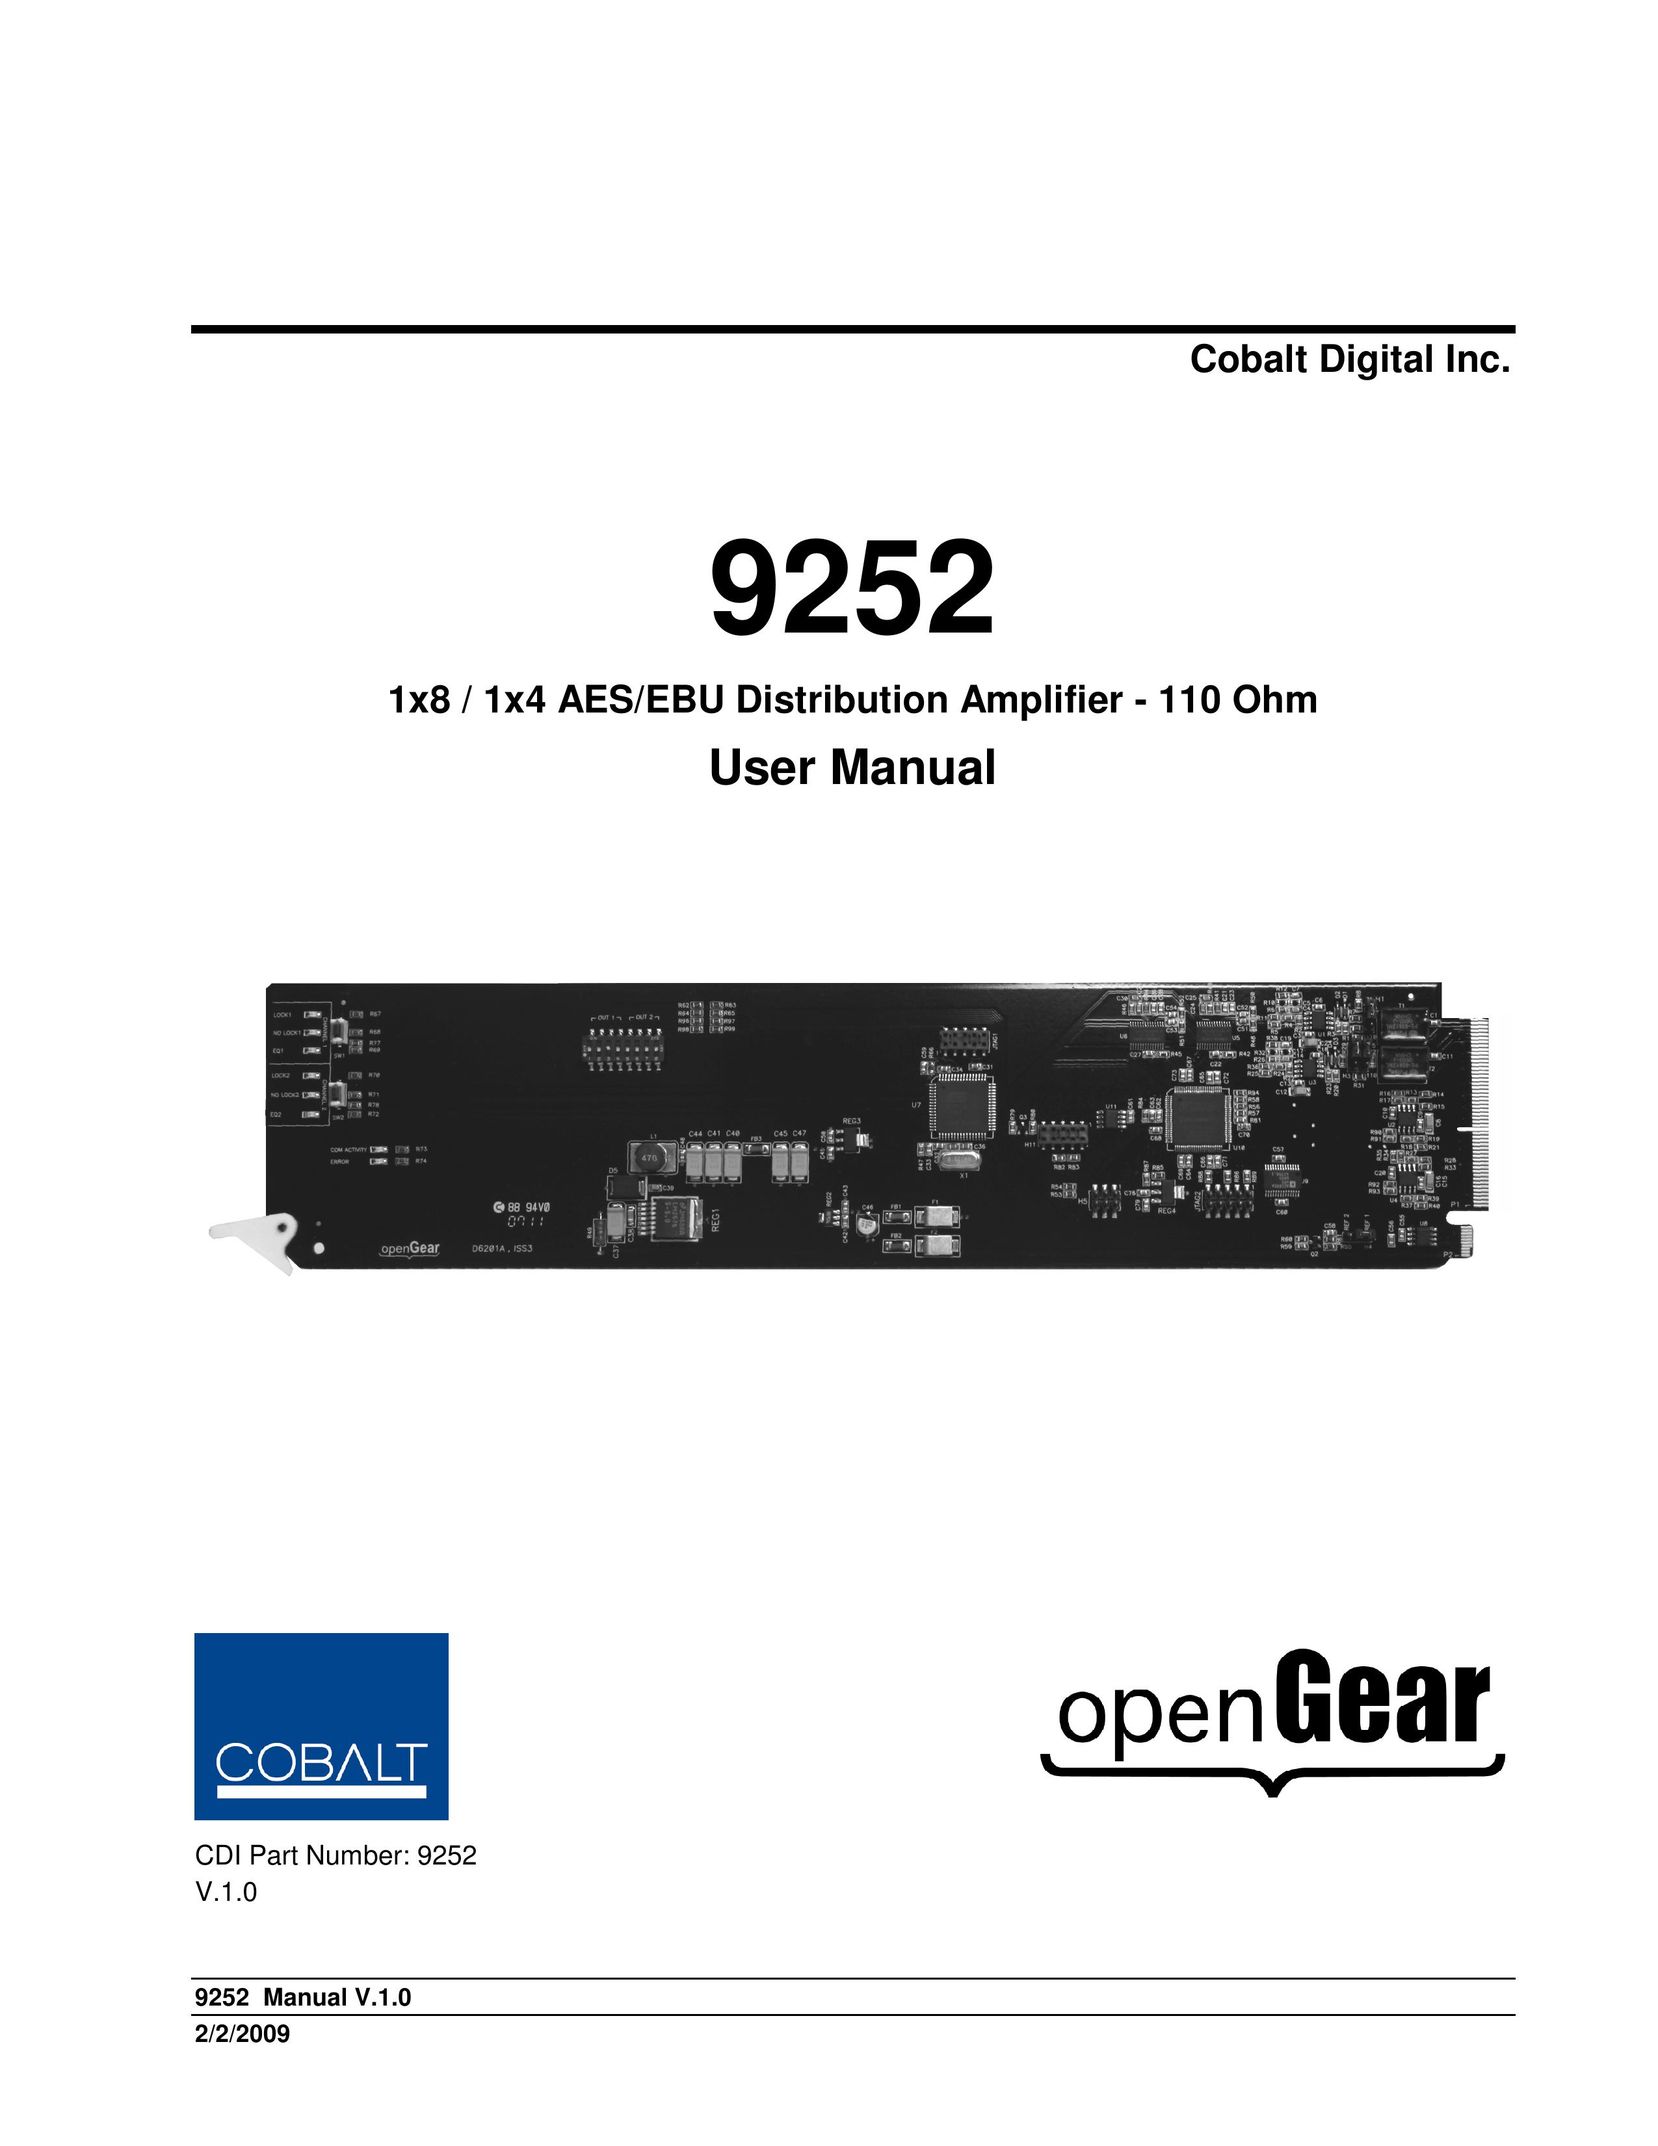 Cobalt Networks 9252 Stereo Amplifier User Manual